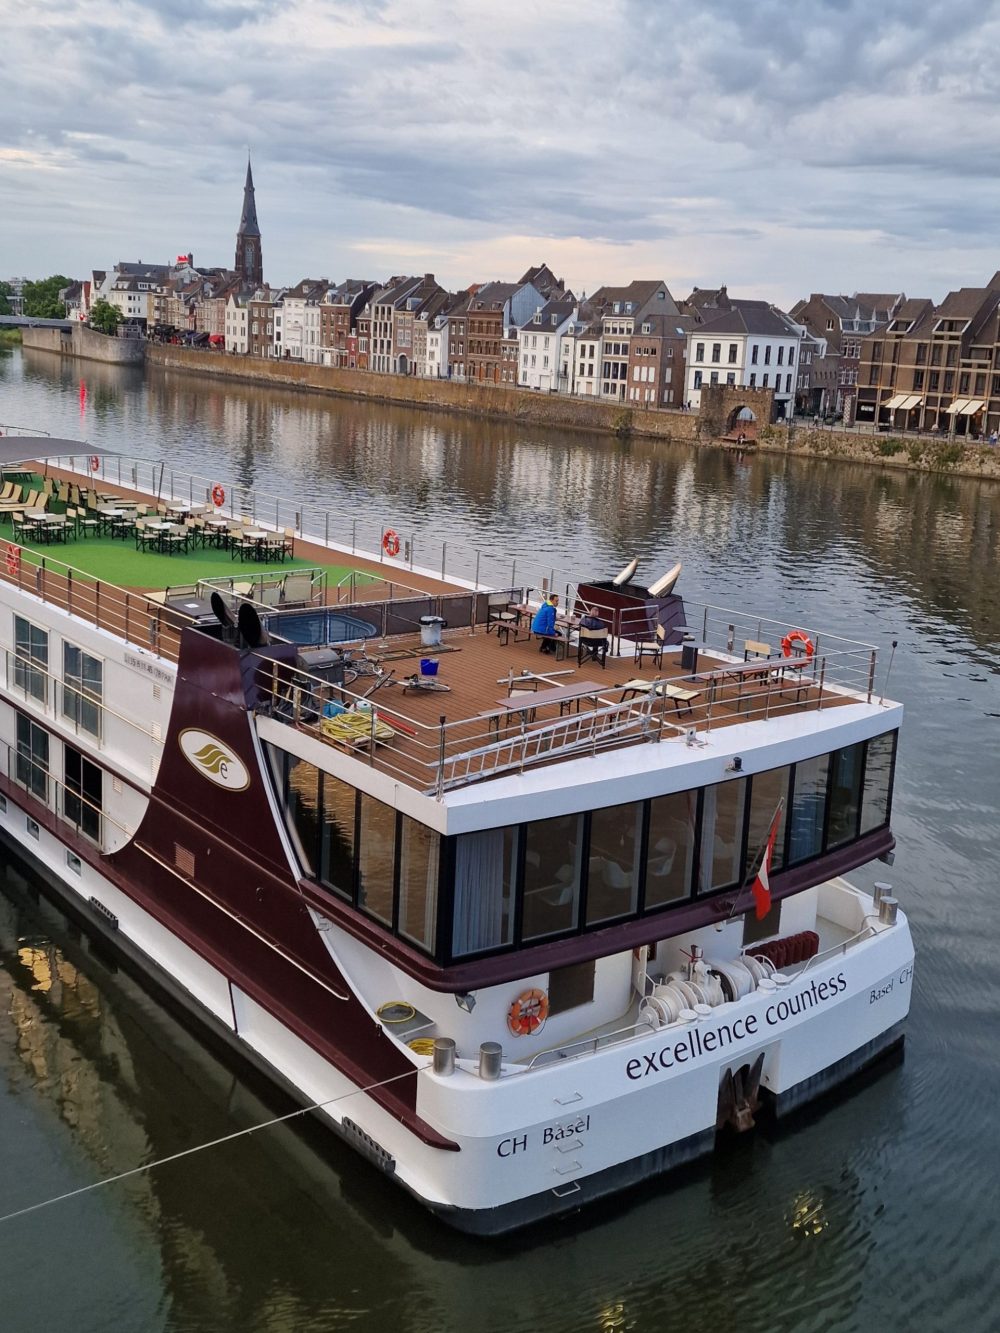 Tour de Couture – River Cruise with Countess Excellence